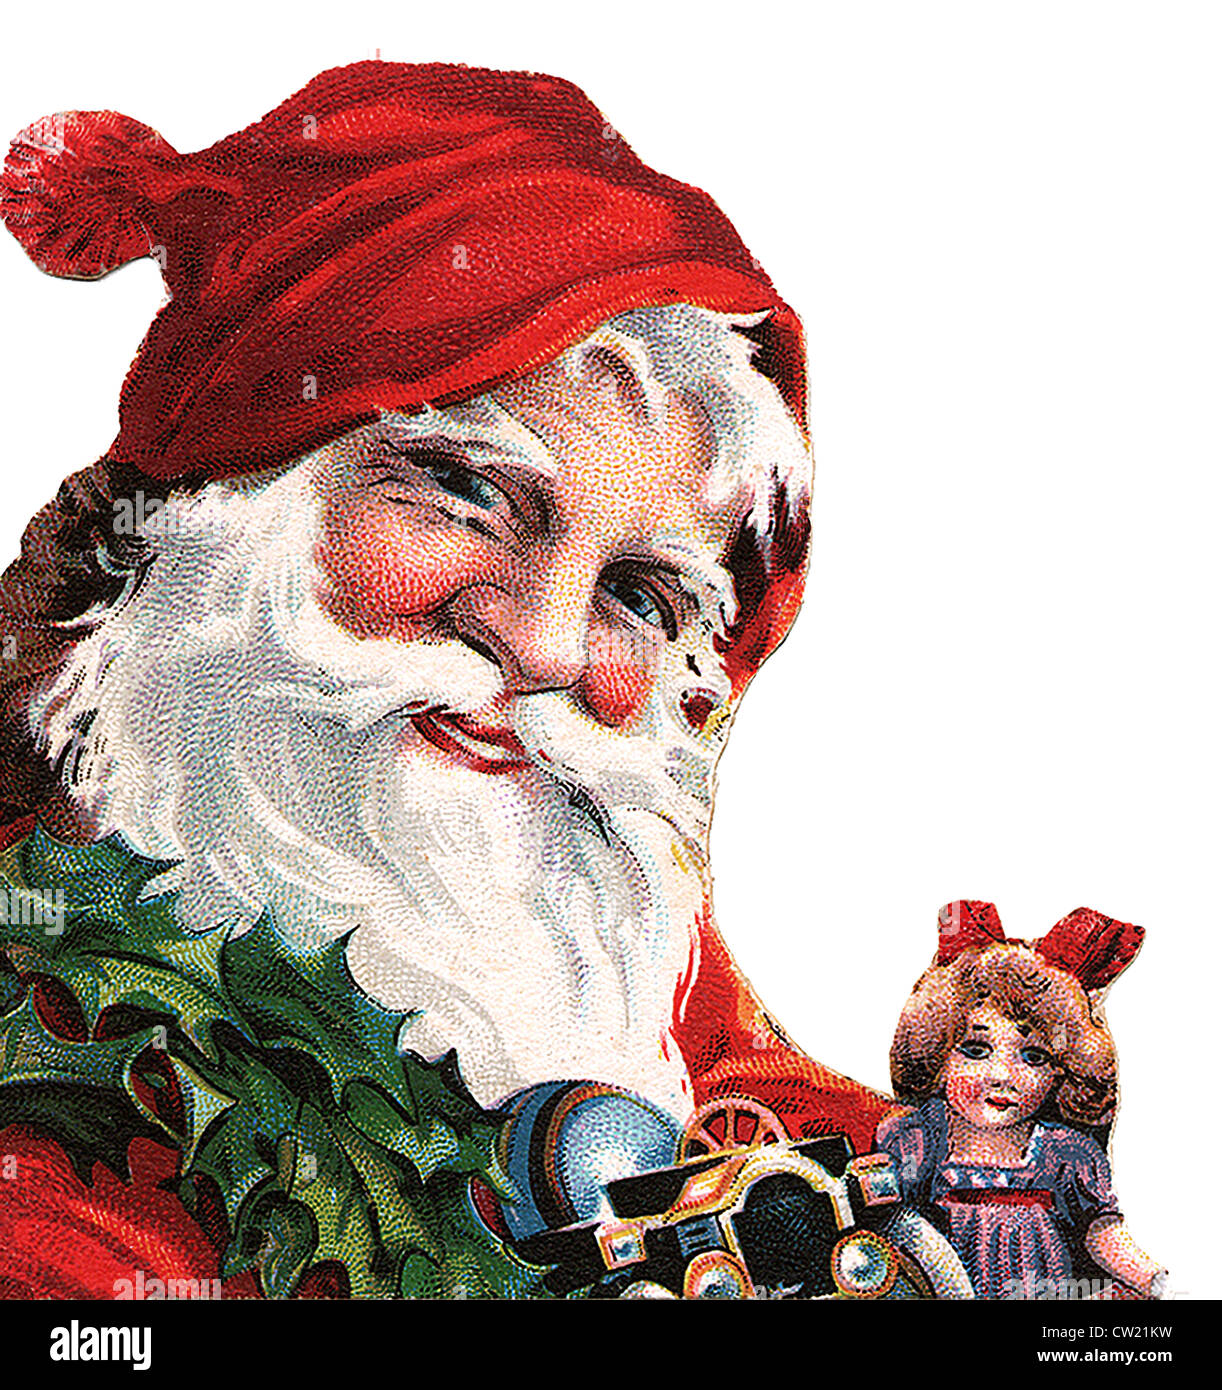 Funny Santa Claus Banque D'Images